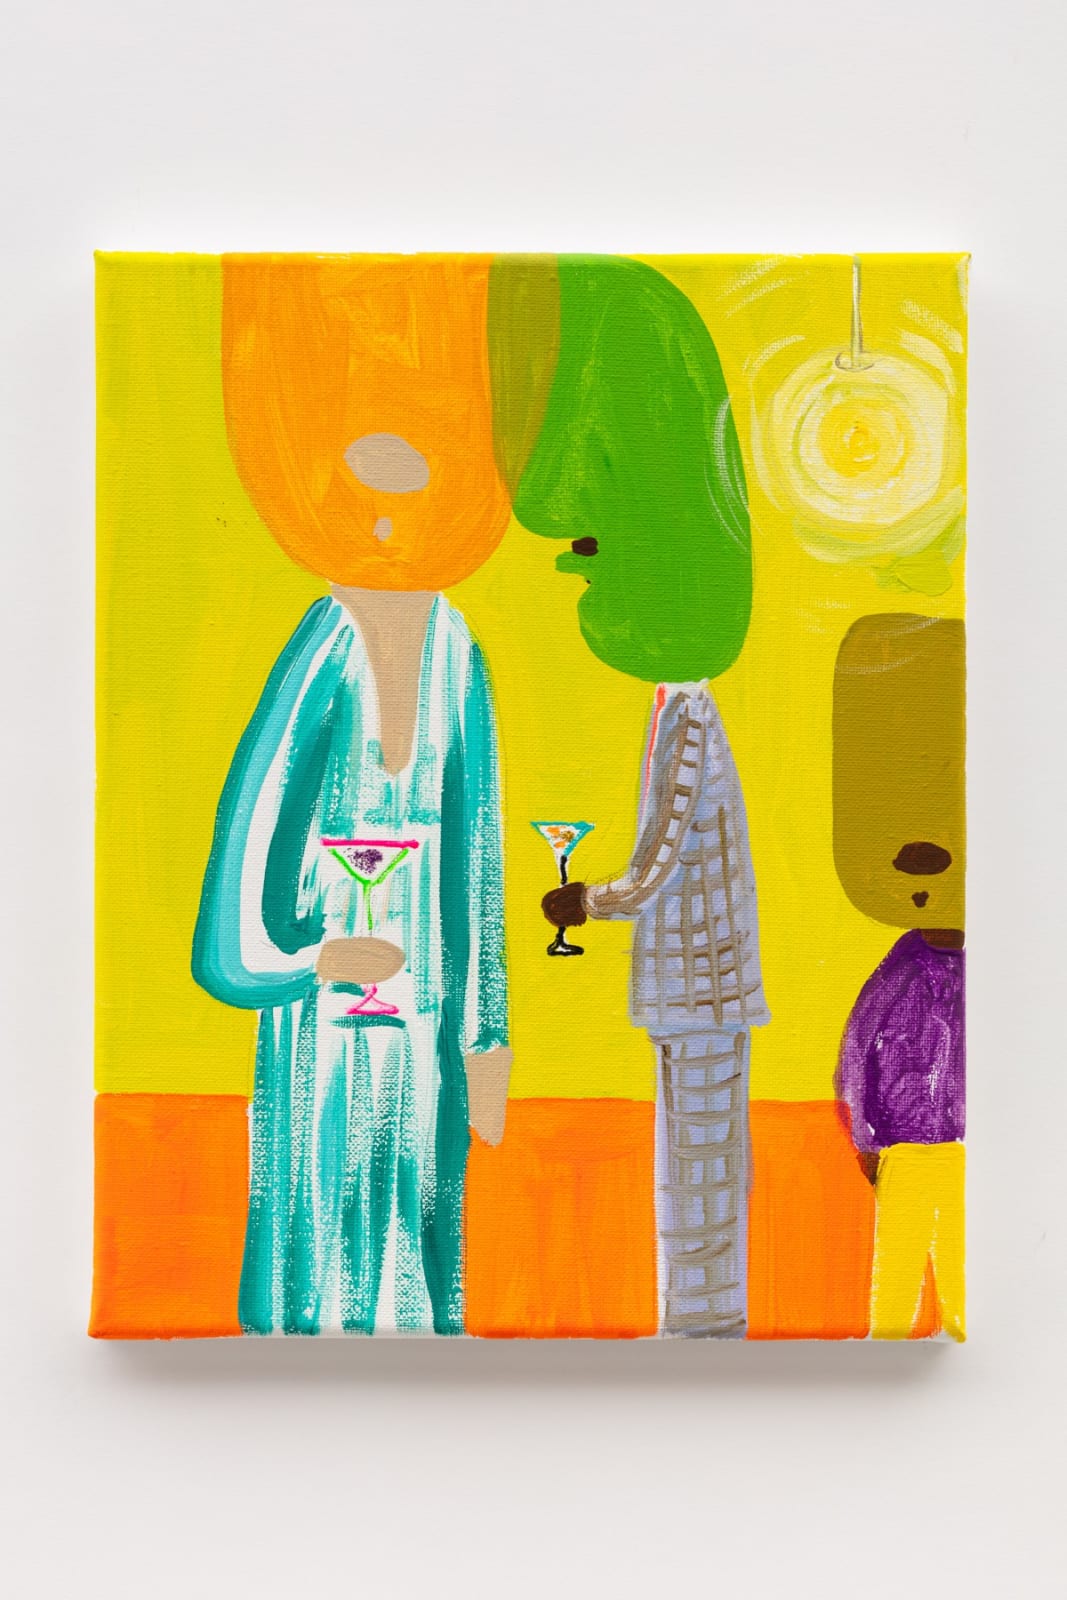 Peter McDonald Party, 2020 acrylic gouache, glitter glue on canvas 31 x 25 cm £4,500 + VAT